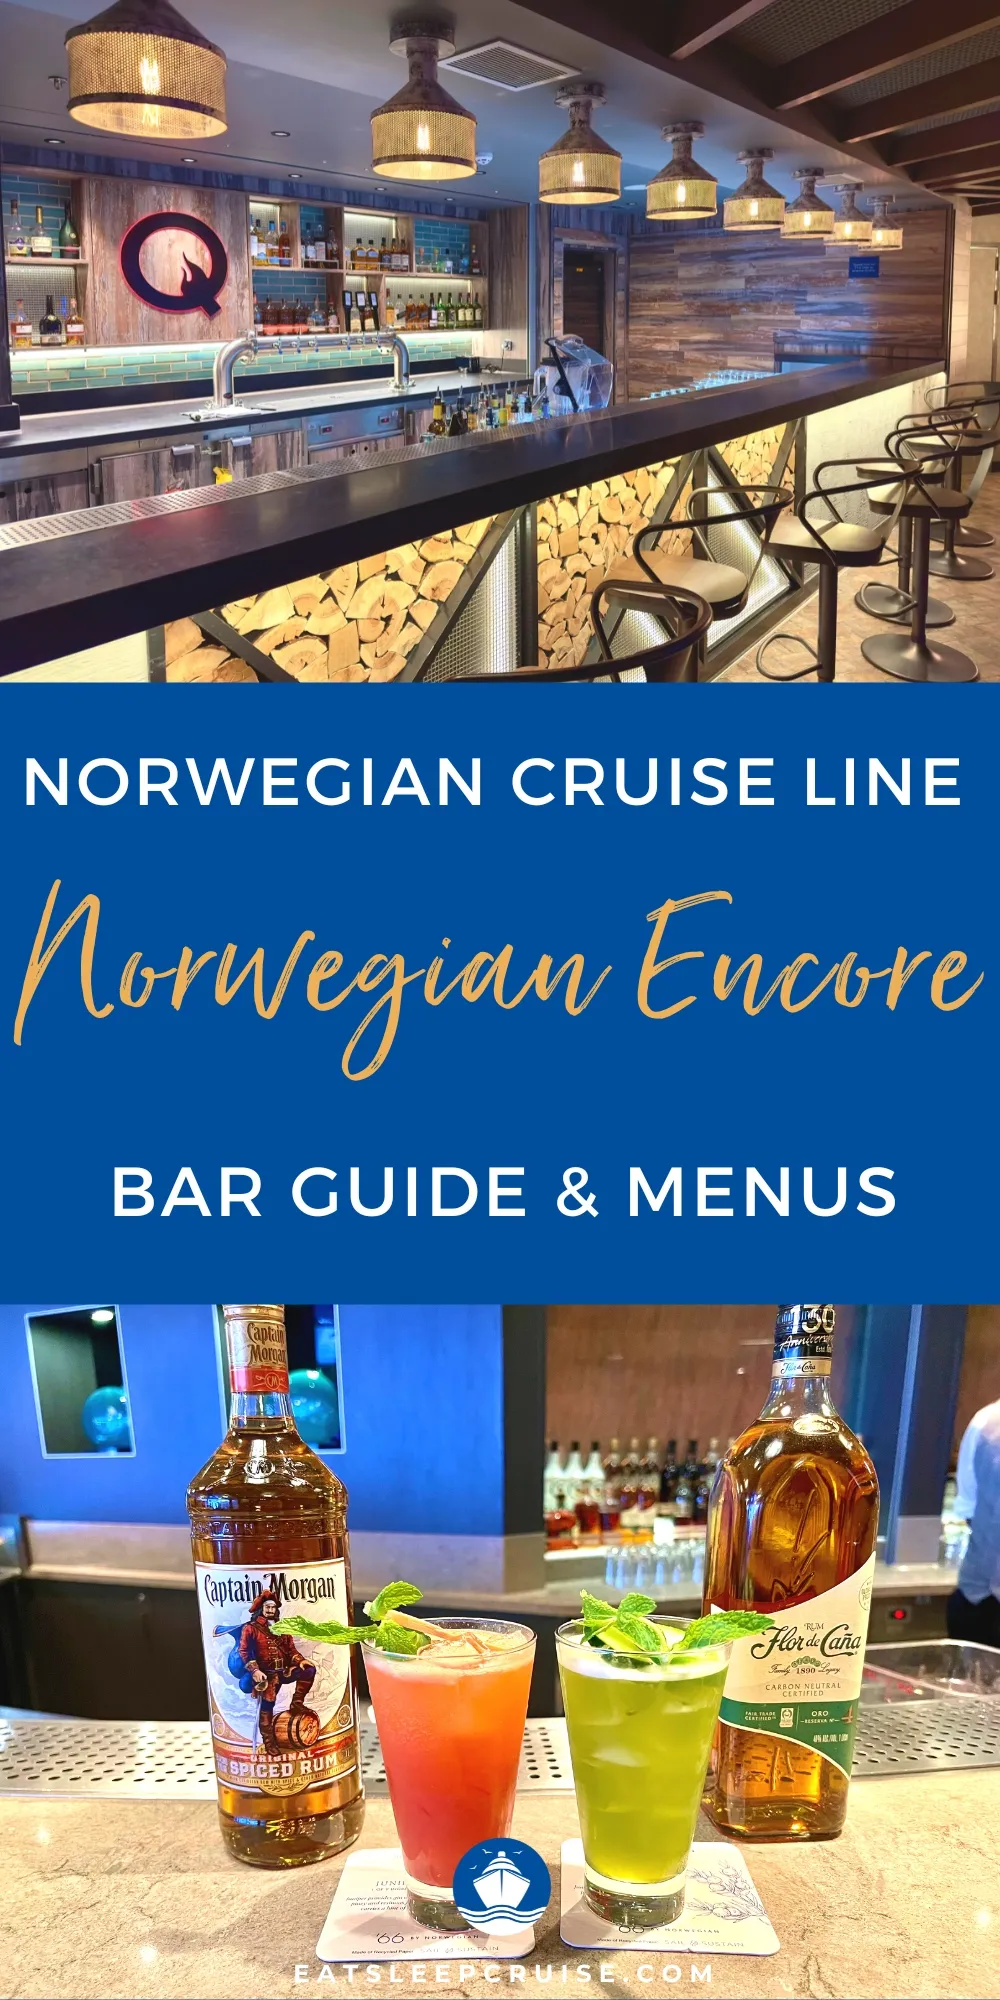 Norwegian Encore Bar Guide